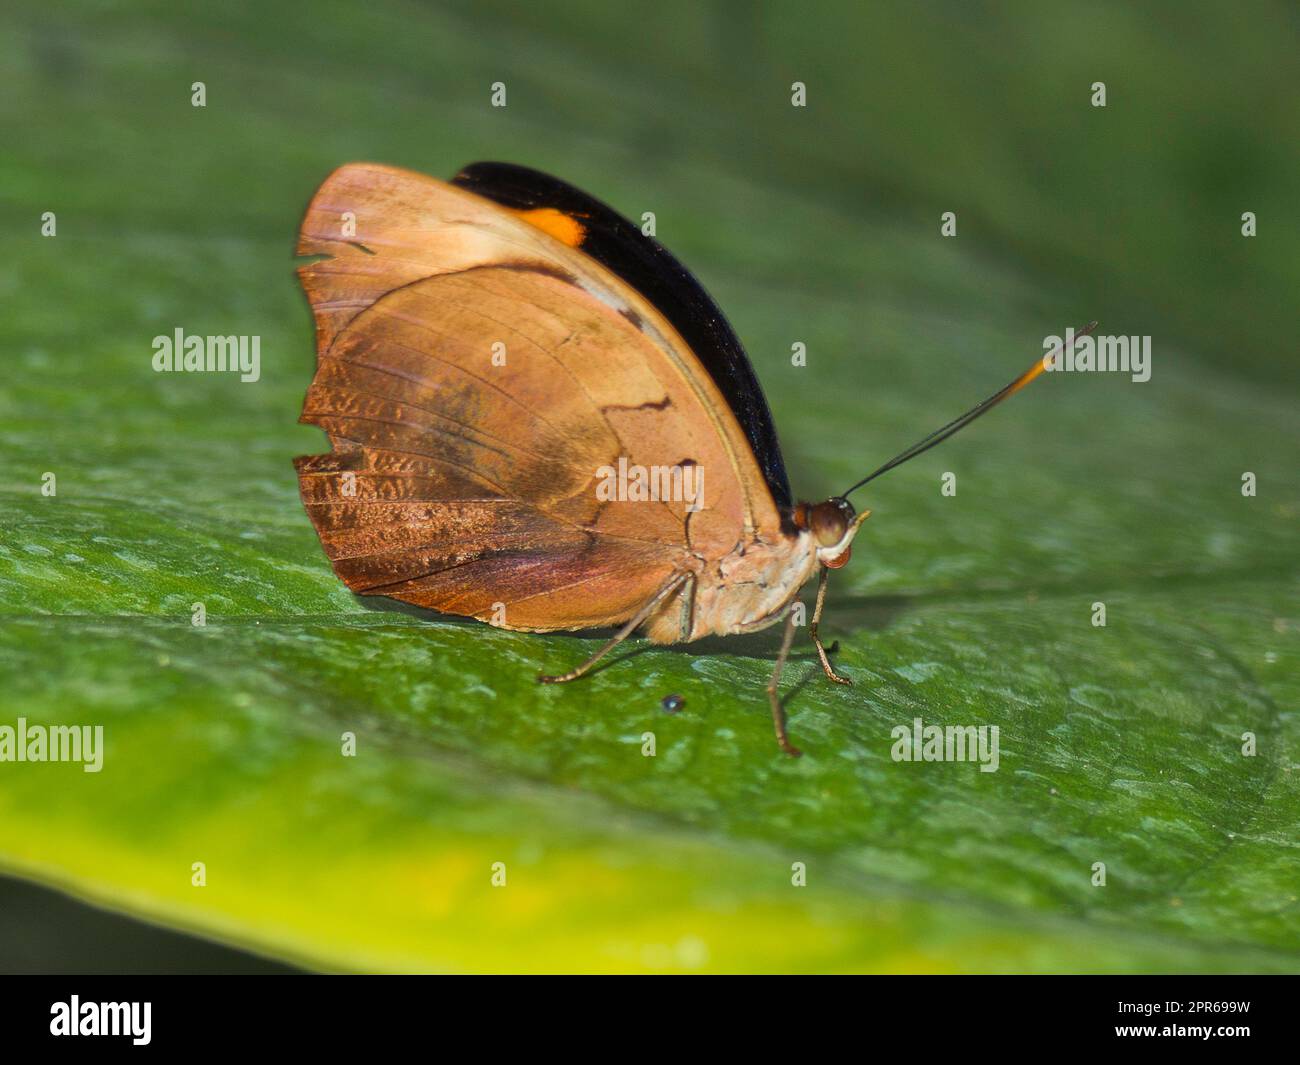 Germania, Hamm, Maximilianpark - Little Postman Butterfly Foto Stock